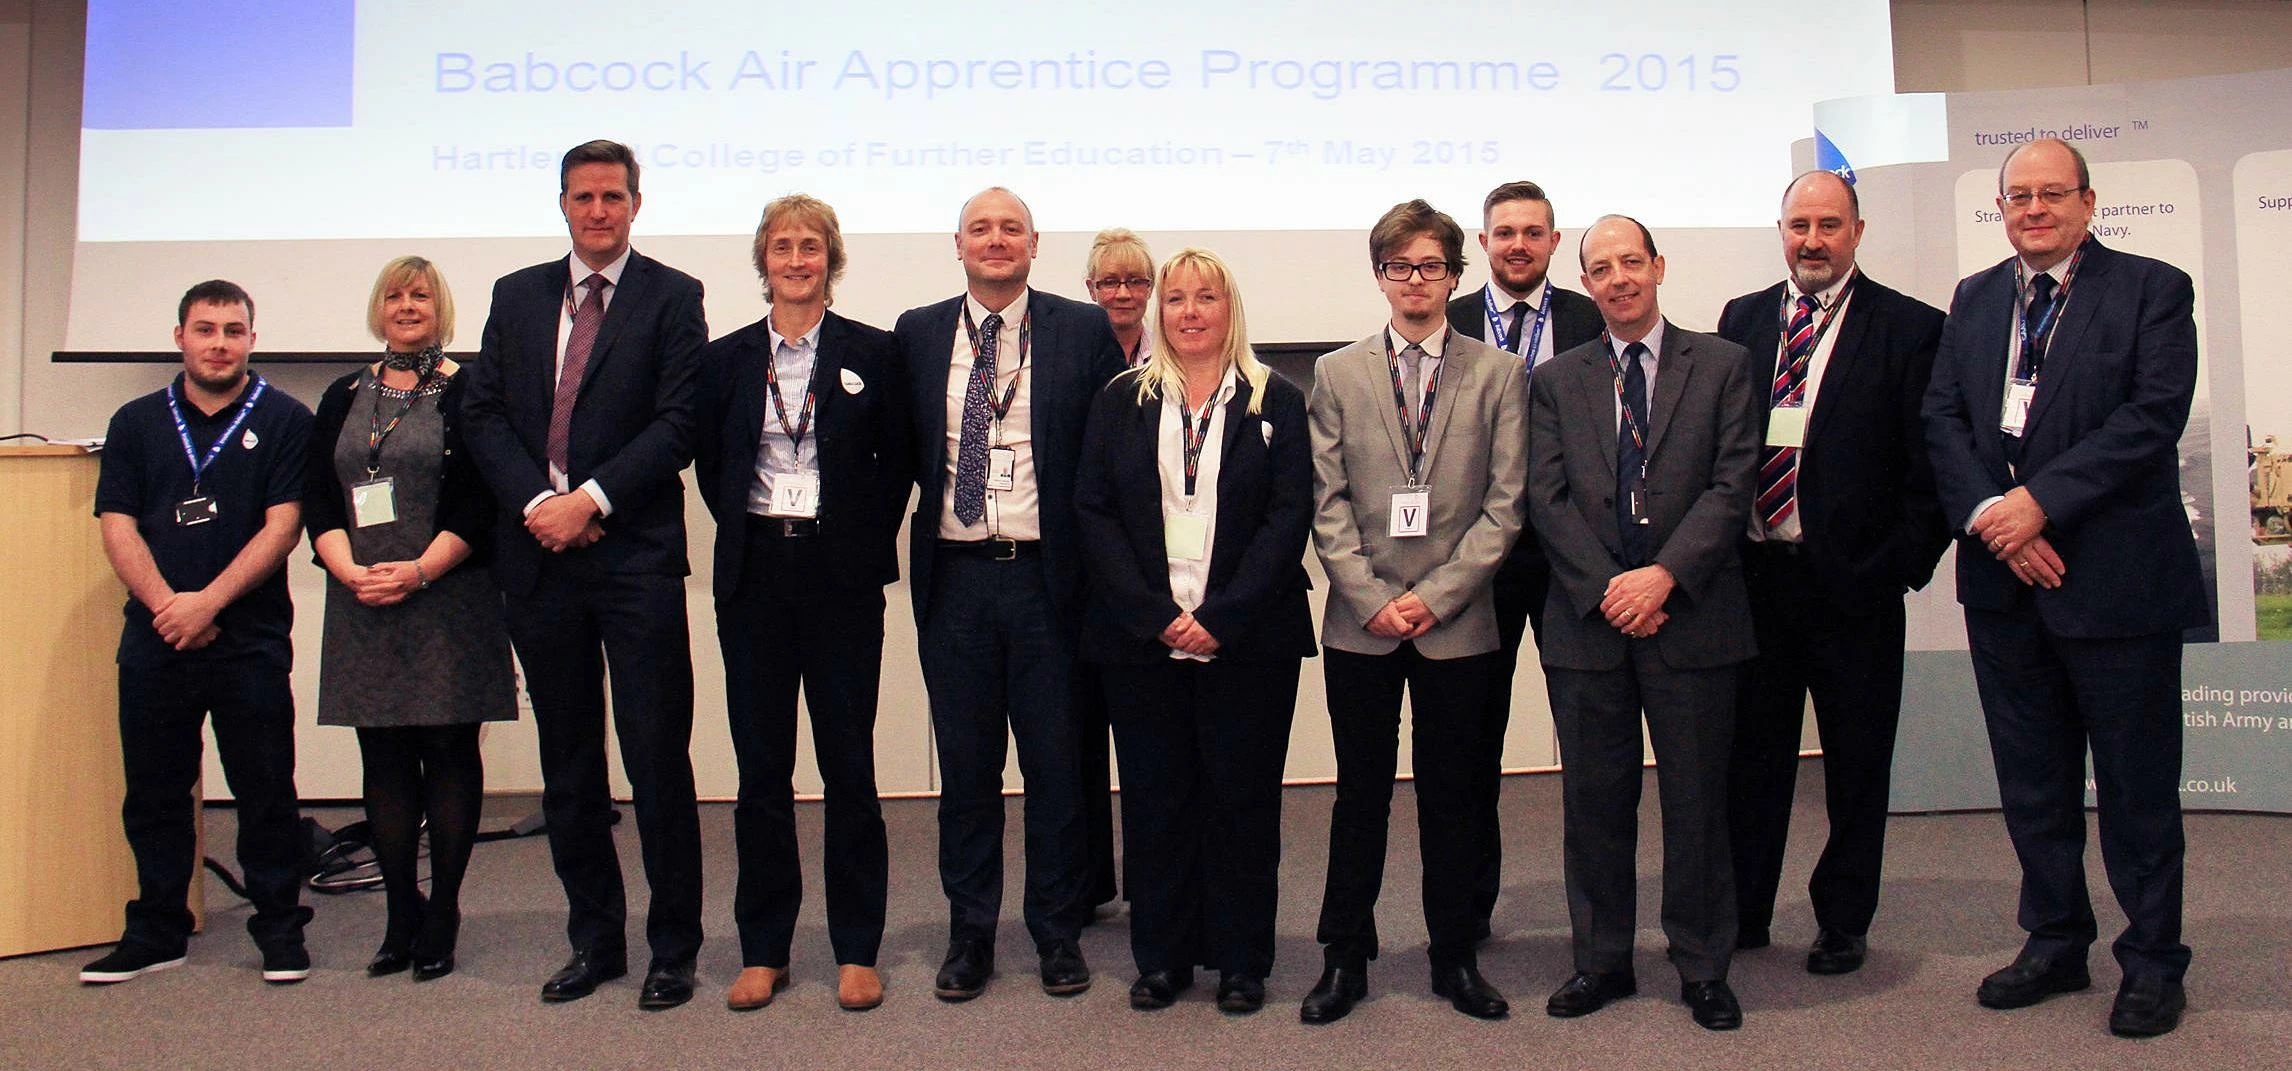 Babcock Air Apprentice Programme 2015